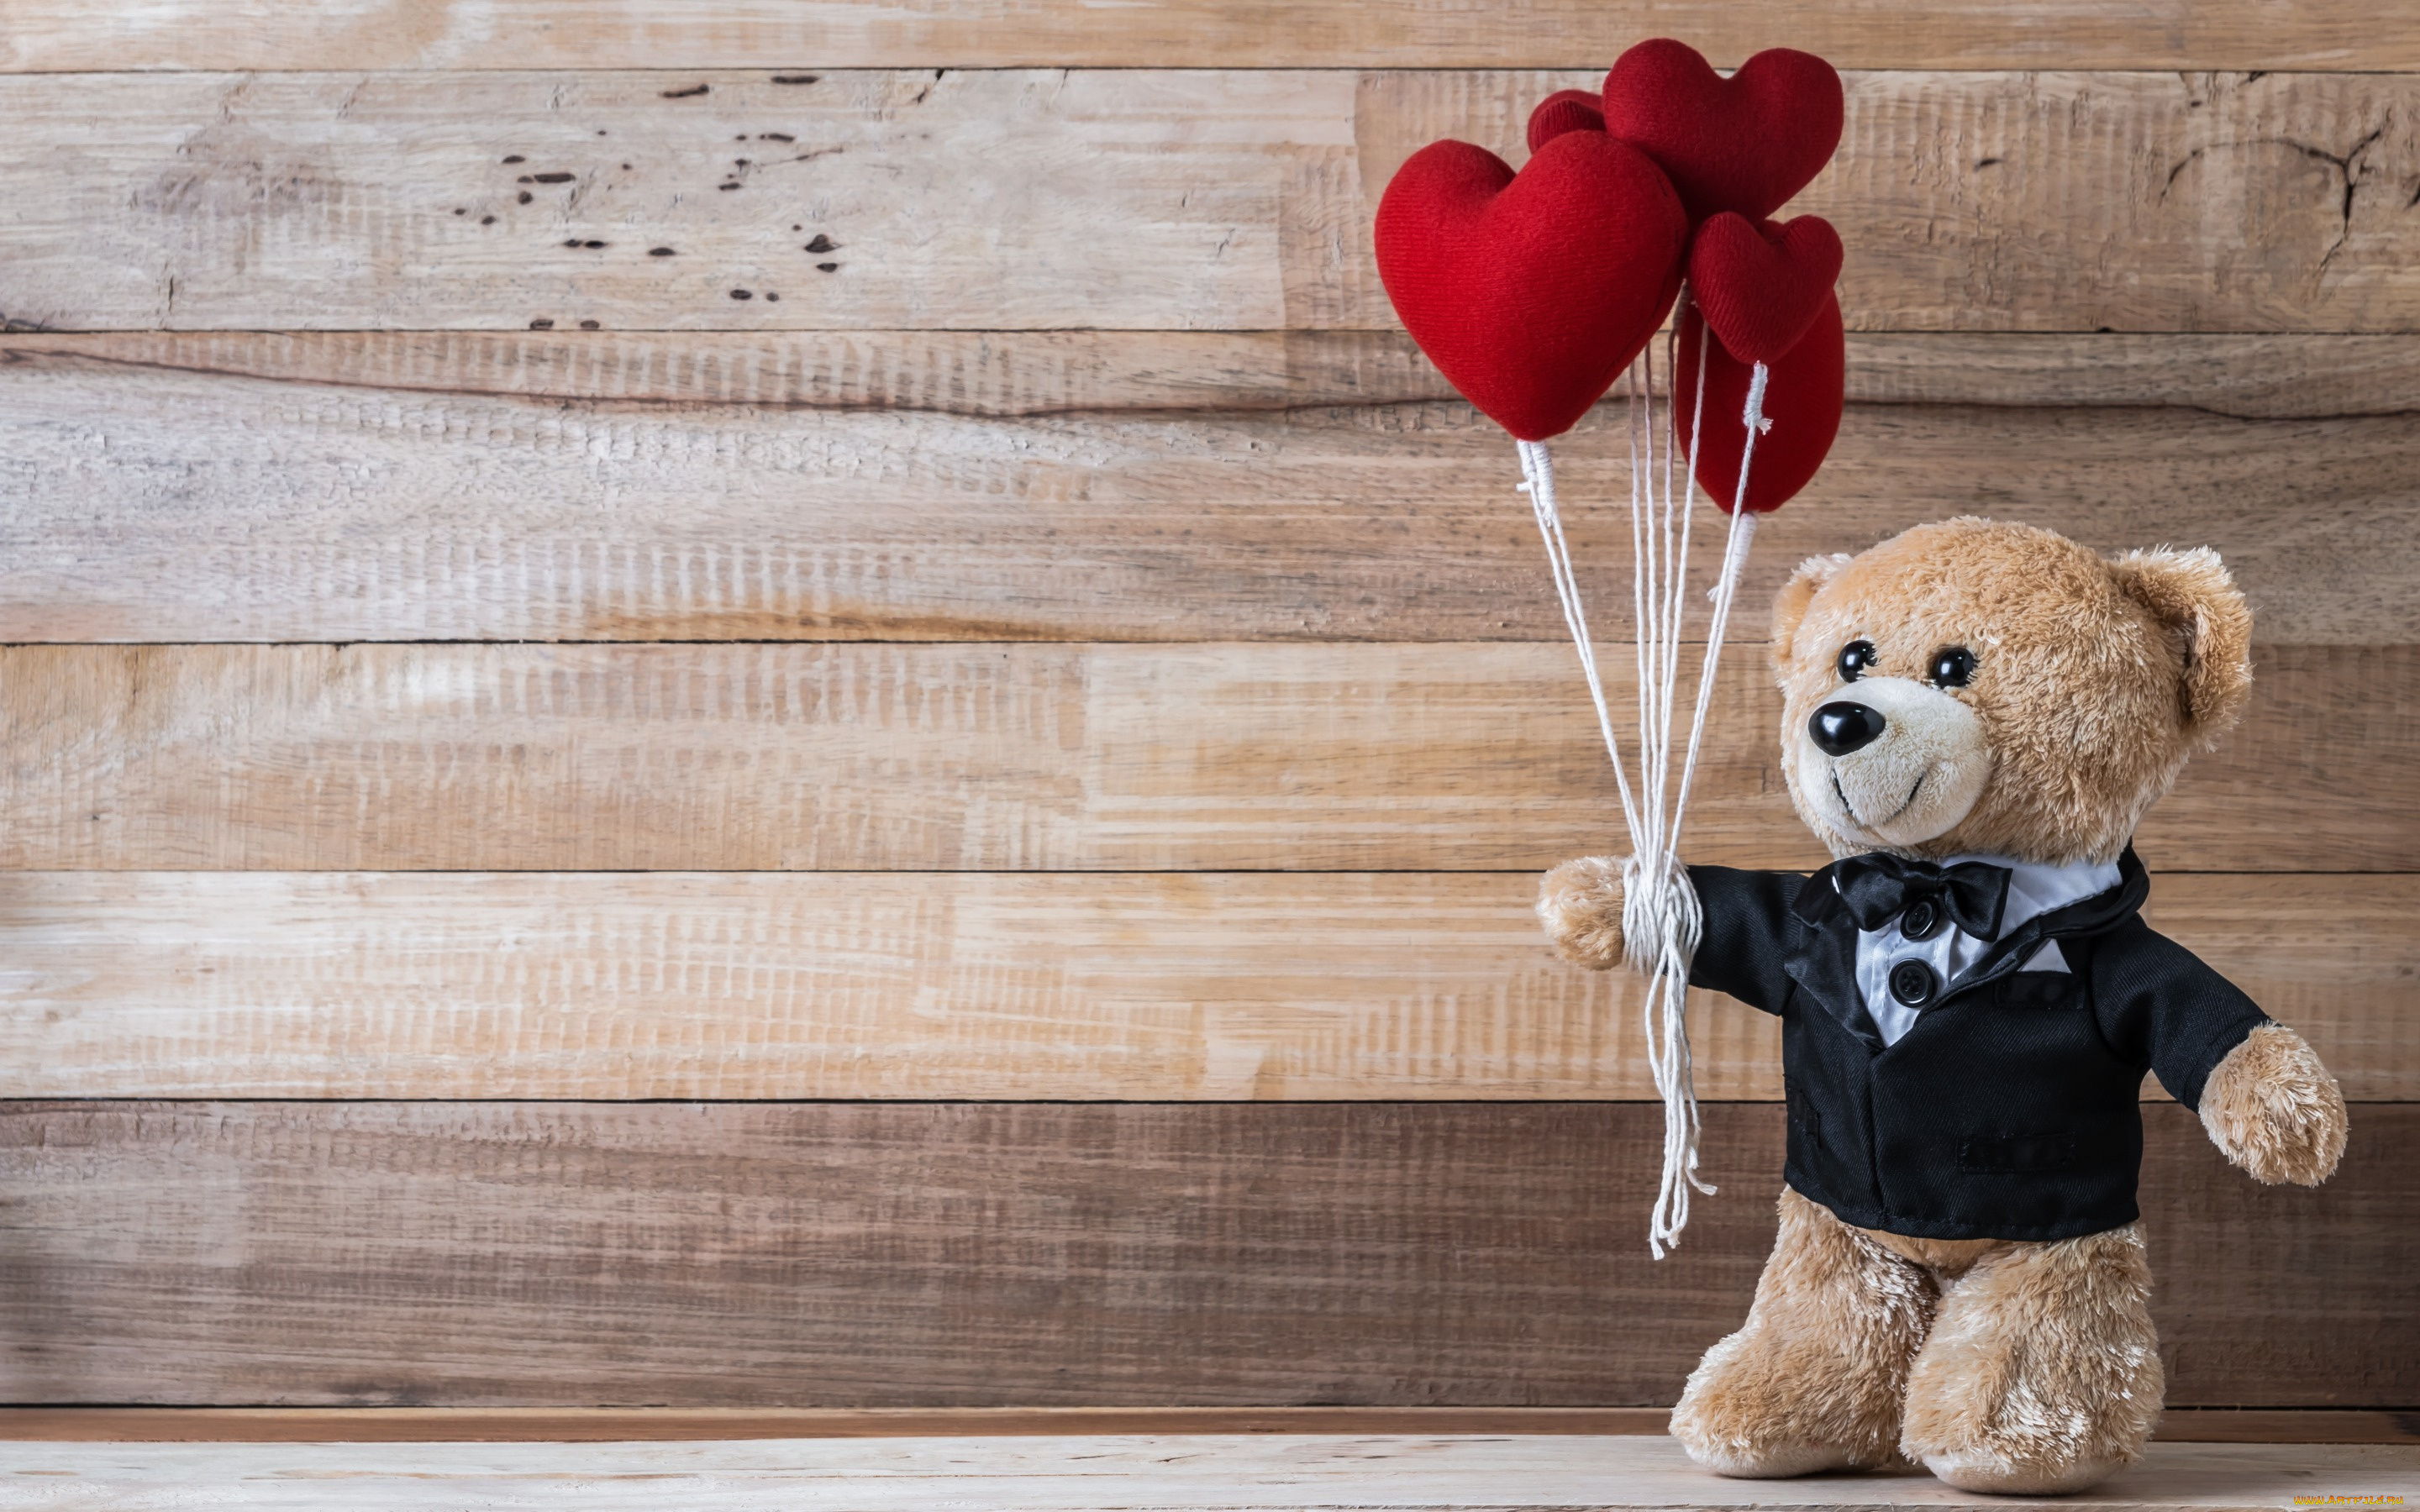 праздничные, мягкие, игрушки, cute, gift, valentine's, day, teddy, медведь, сердечки, red, love, bear, heart, wood, romantic, сердце, игрушка, любовь